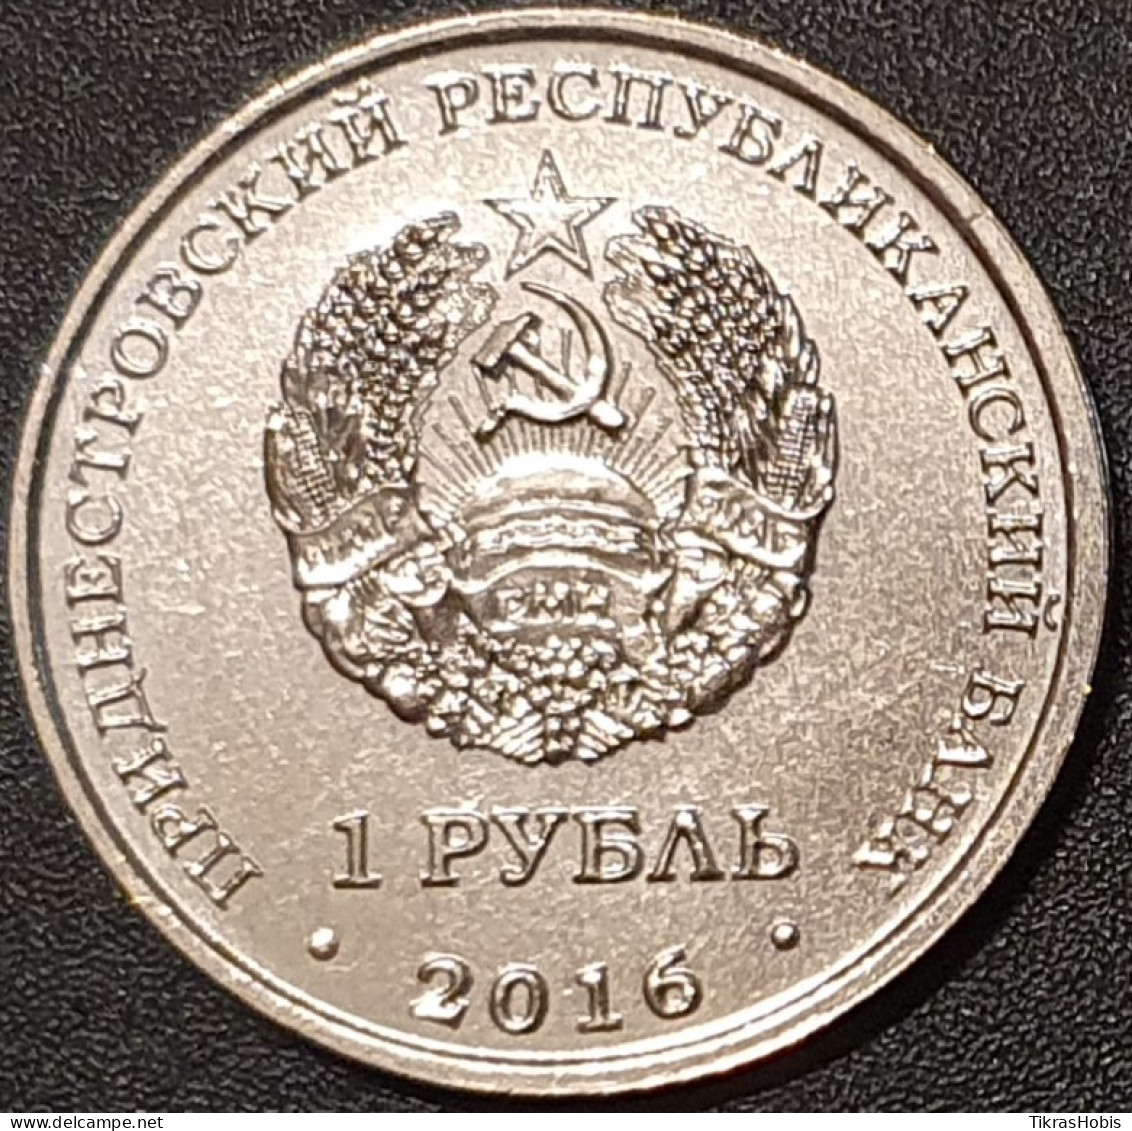 Moldova, Transnistria 1 Ruble, 2016 IIHF World Cup UC123 - Moldavië